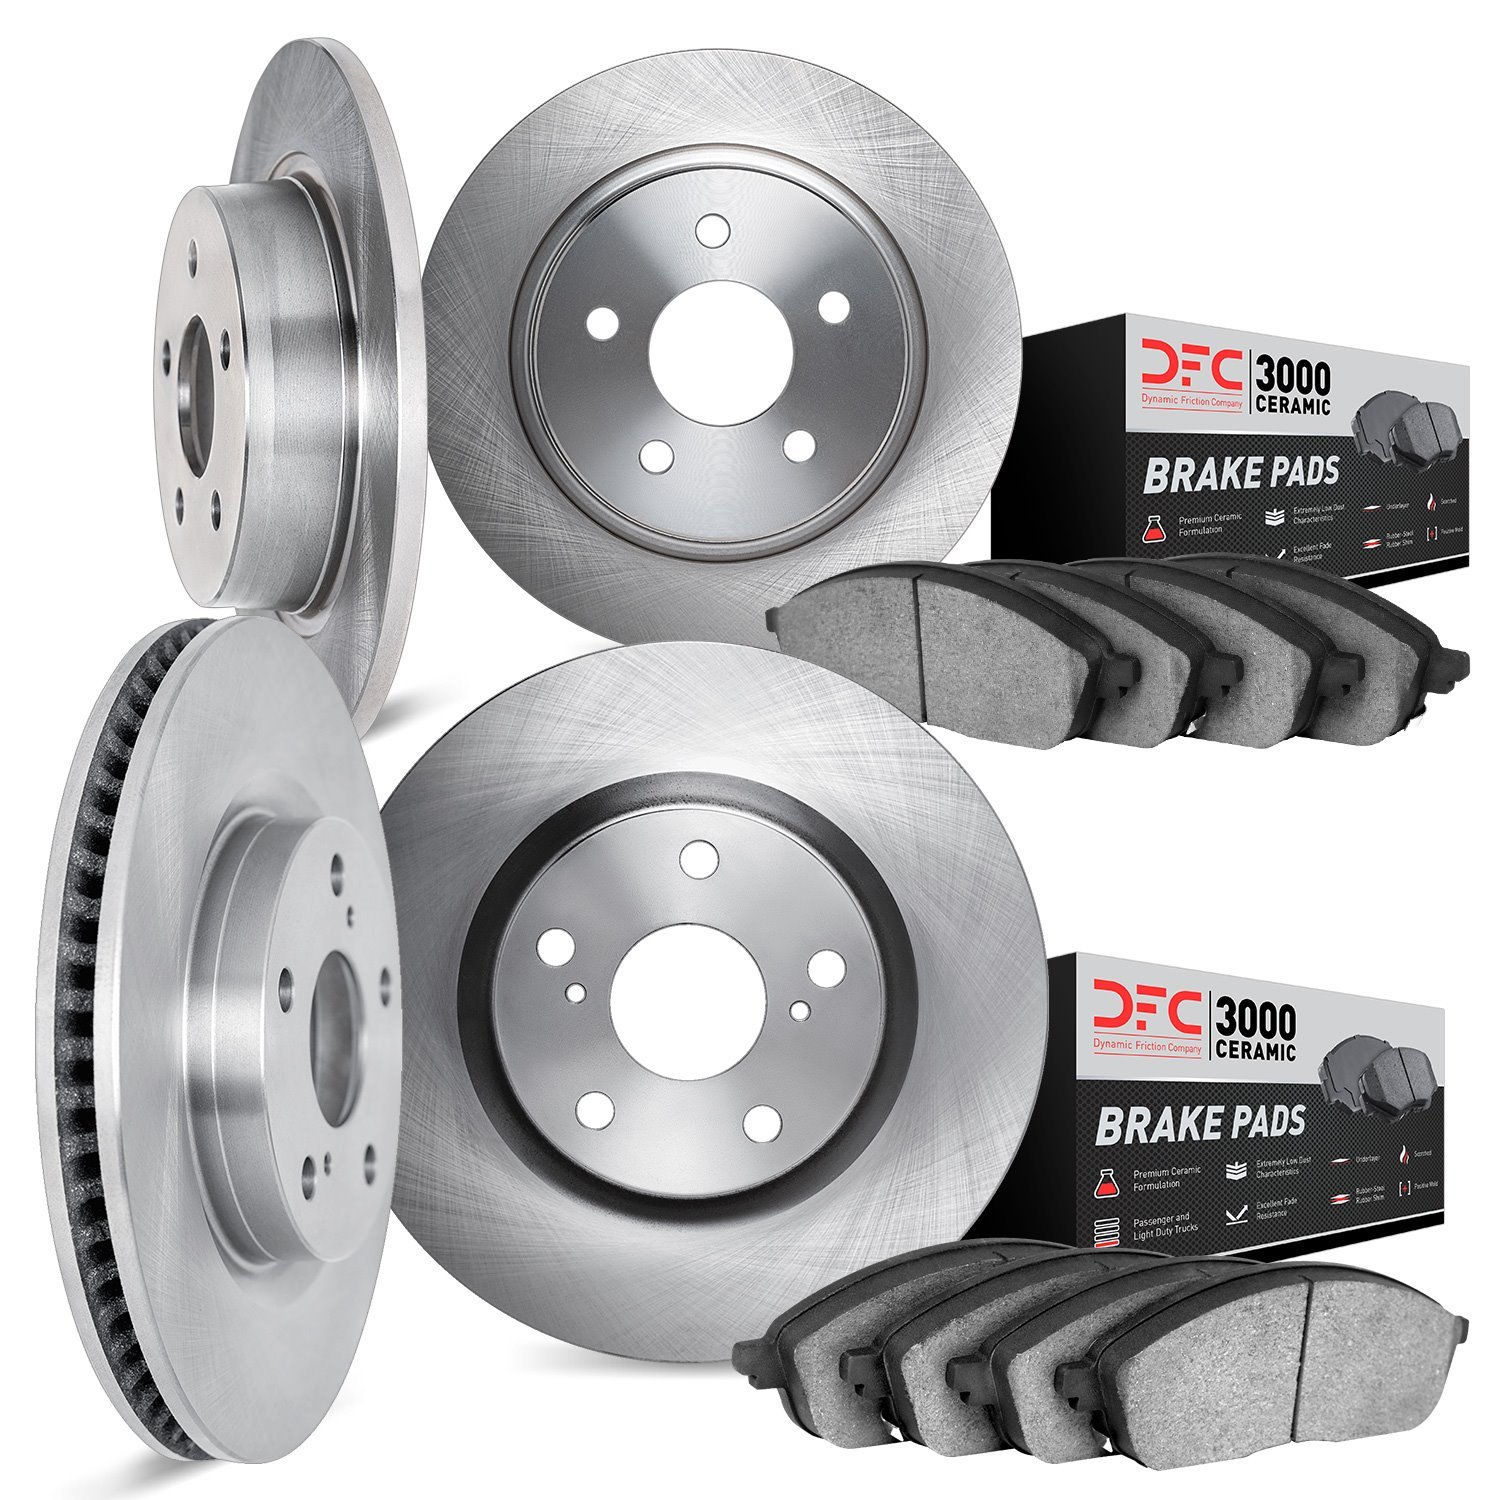 6304-01001 Brake Rotors with 3000-Series Ceramic Brake Pads Kit, 2014-2019 Suzuki, Position: Front and Rear